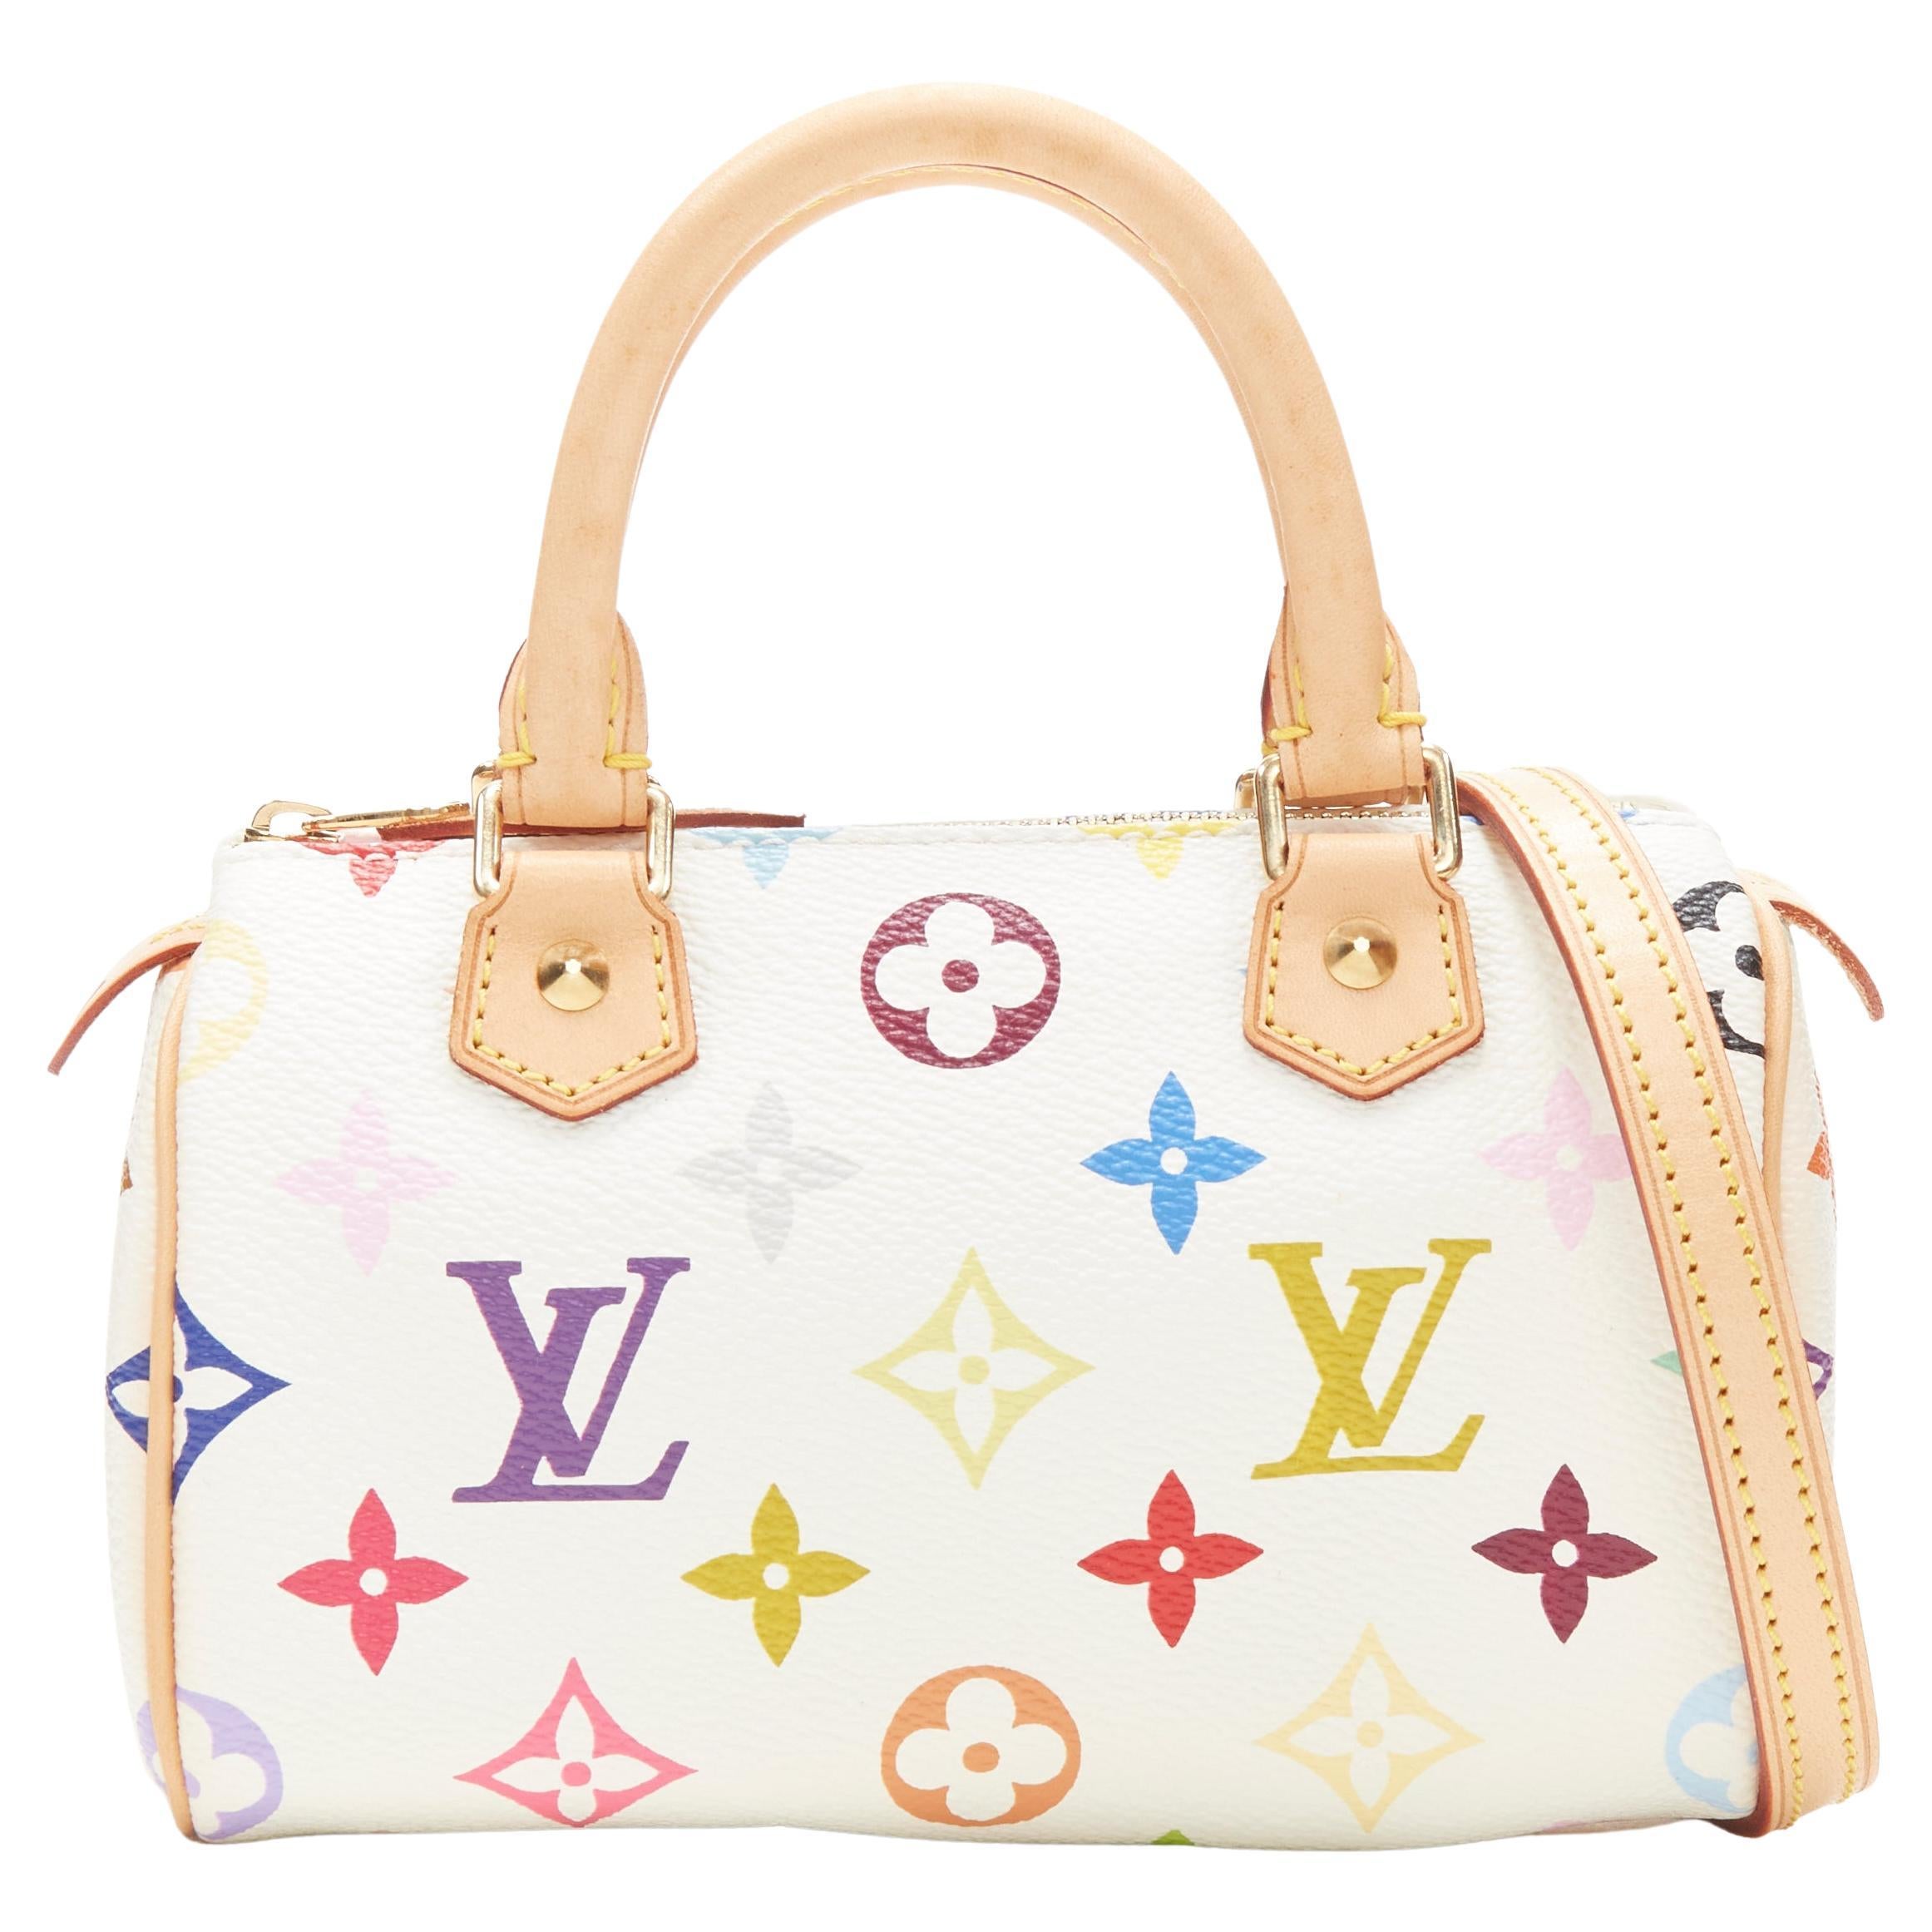 Louis Vuitton Mini Hl Speedy Bag - For Sale on 1stDibs